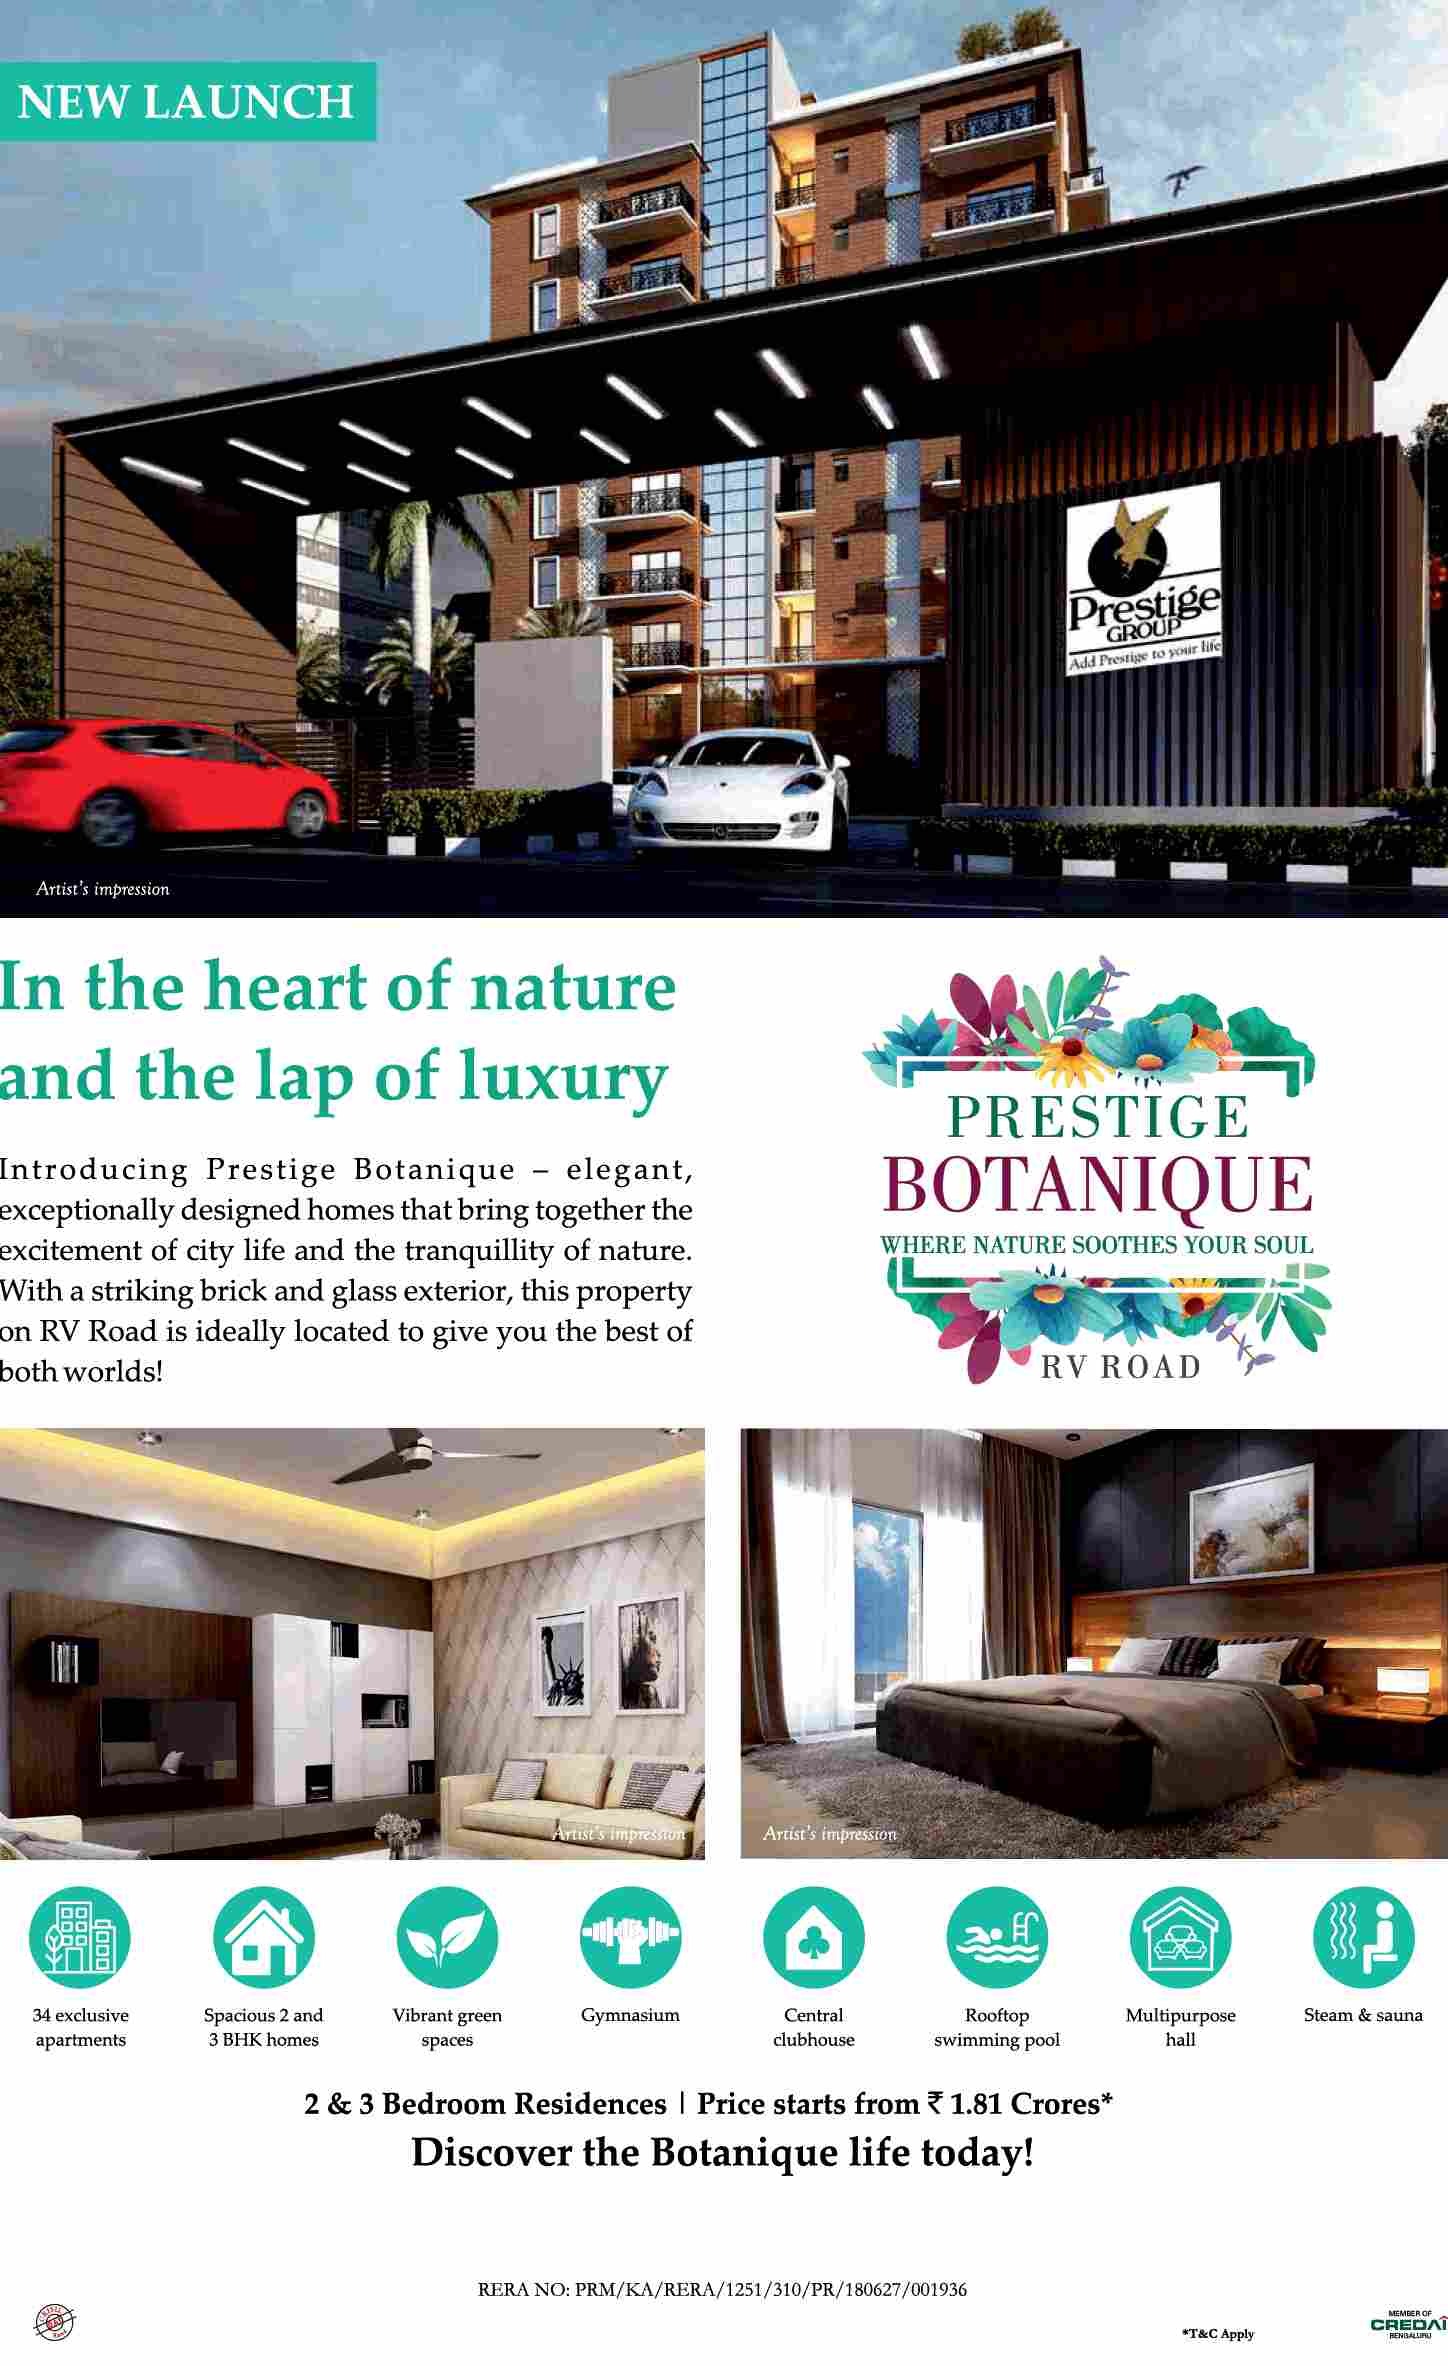 Book 2 & 3 bedroom residences @ Rs 1.81 cr at Prestige Botanique in Bangalore Update